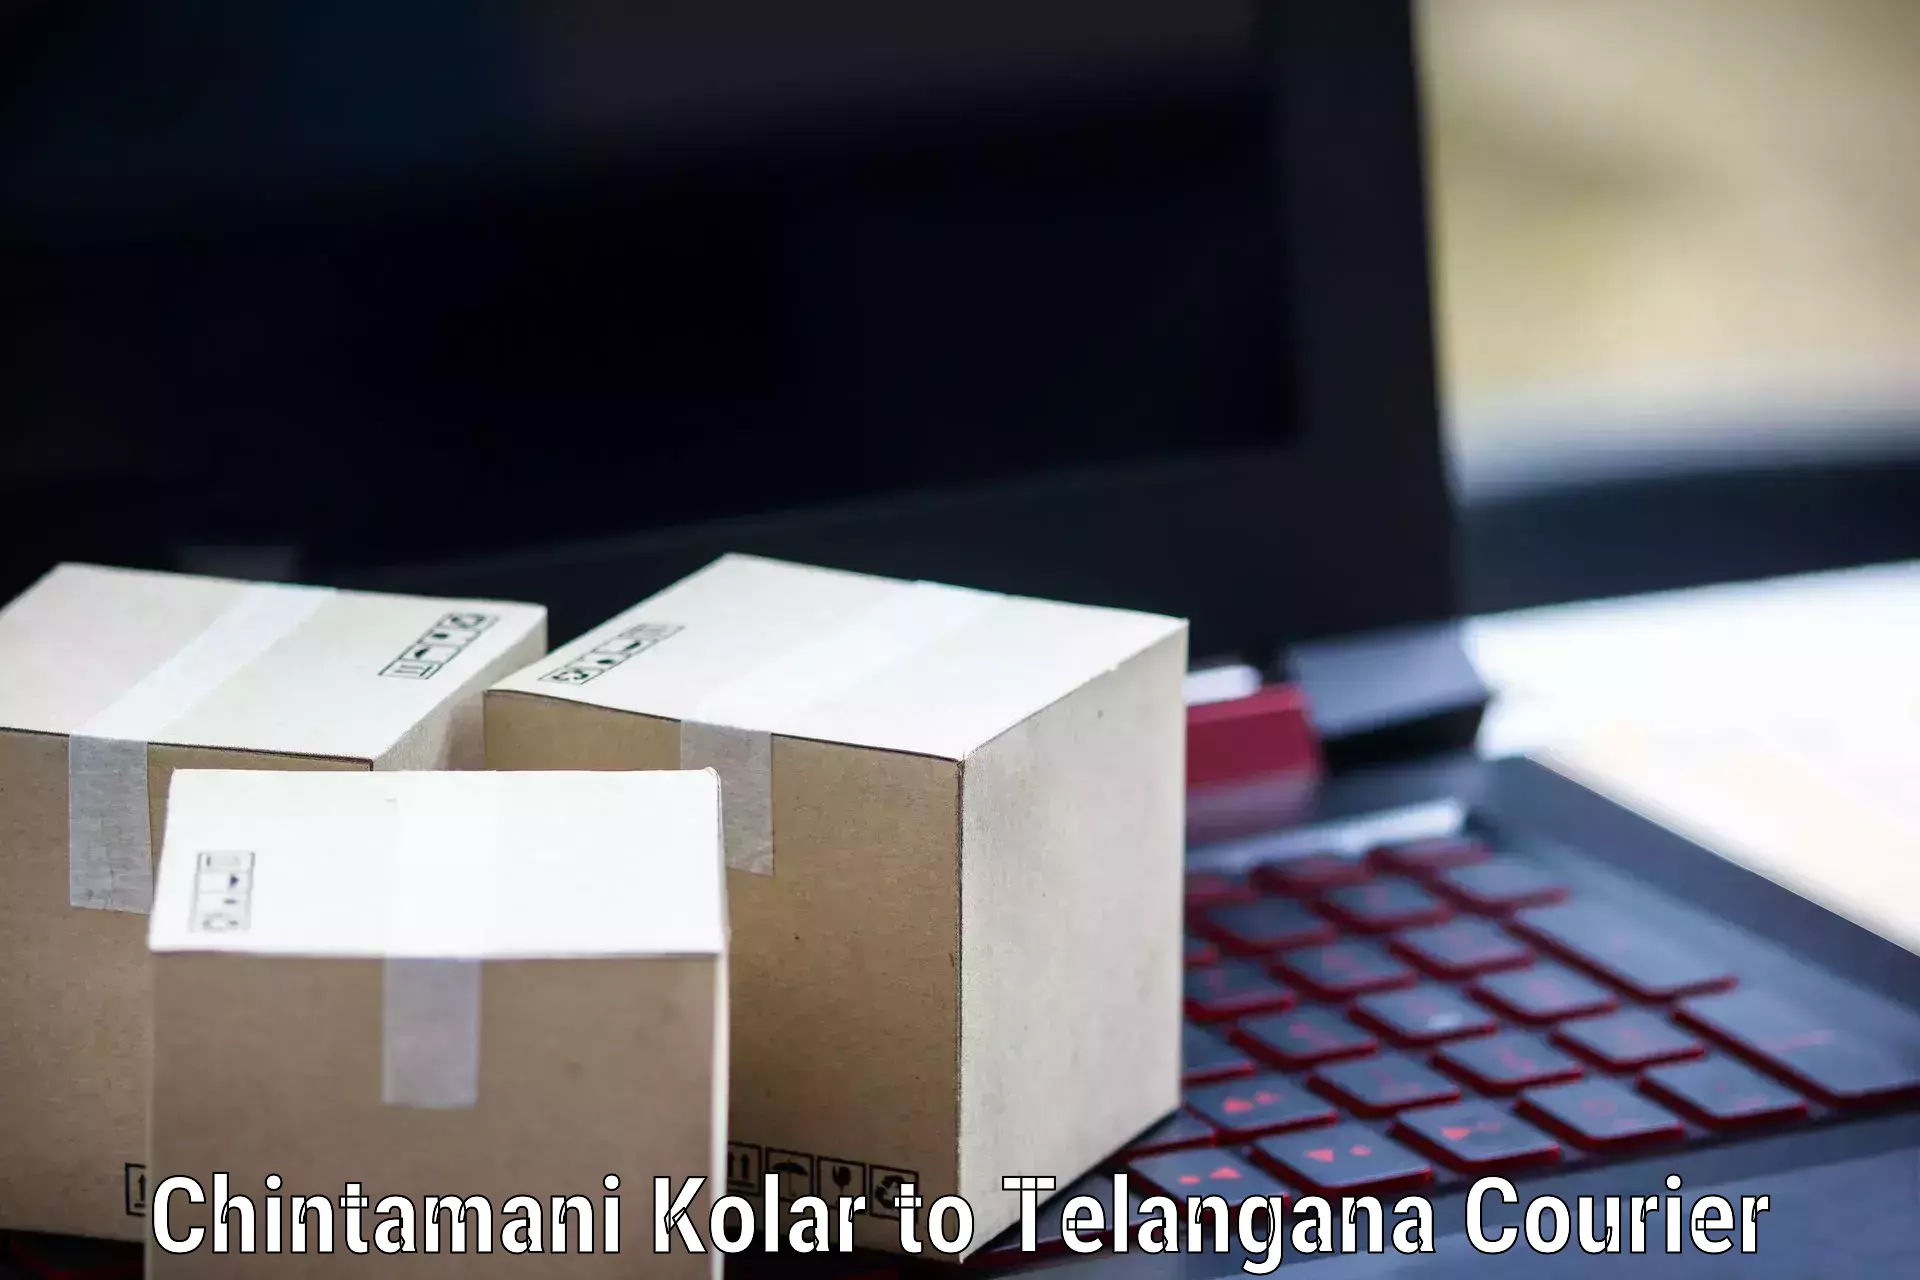 Courier insurance Chintamani Kolar to Hyderabad